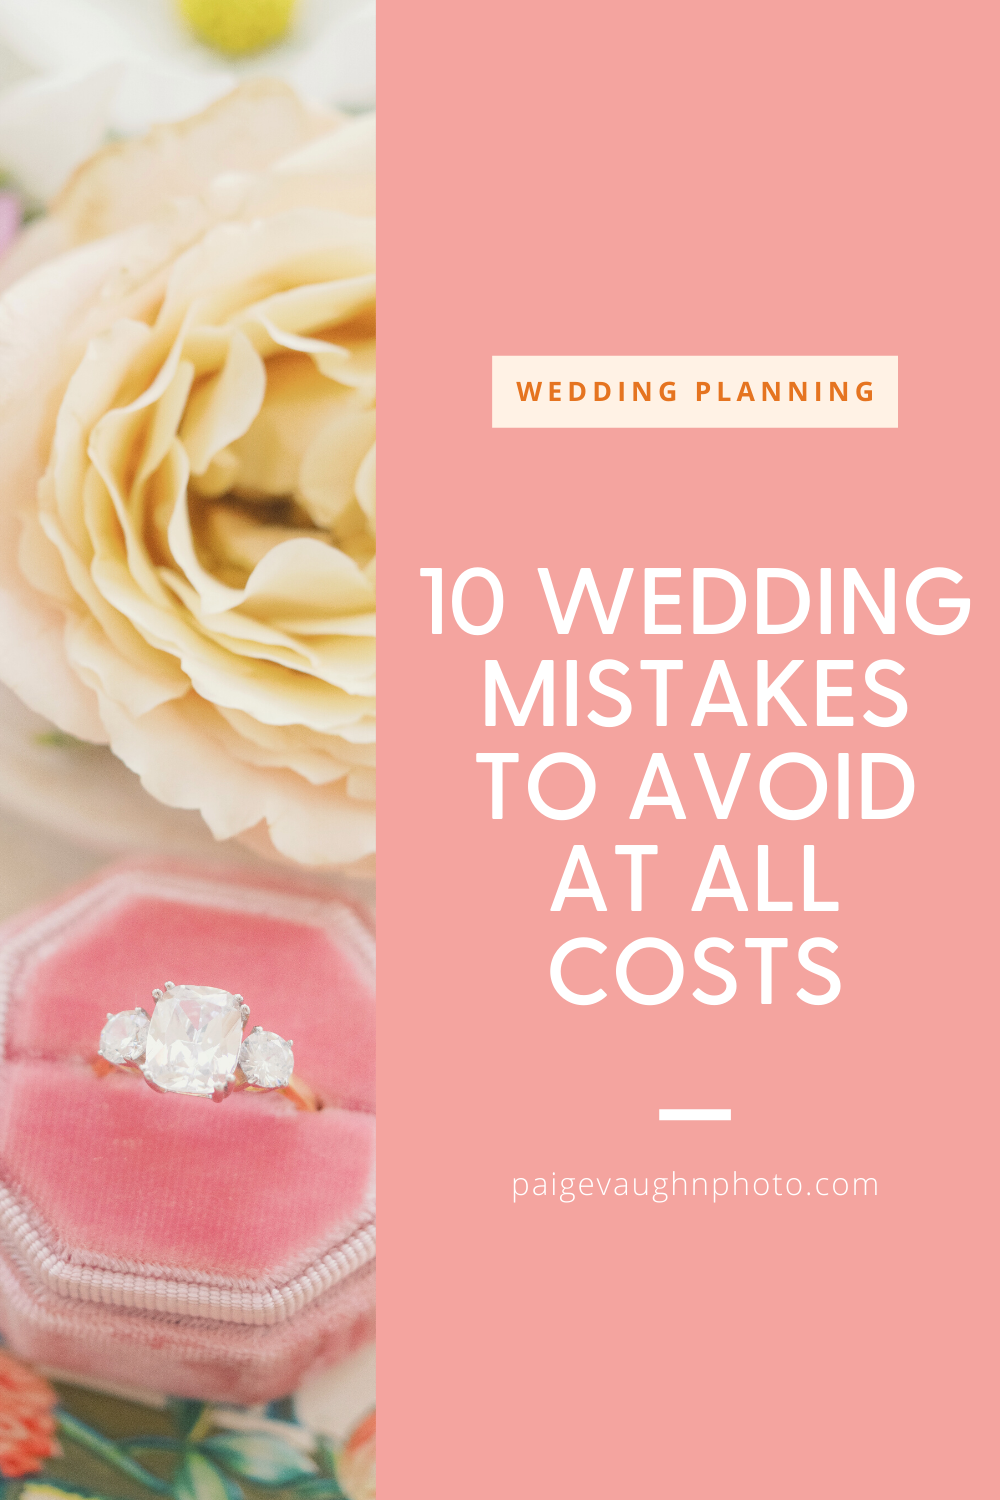 How to Start Wedding Planning